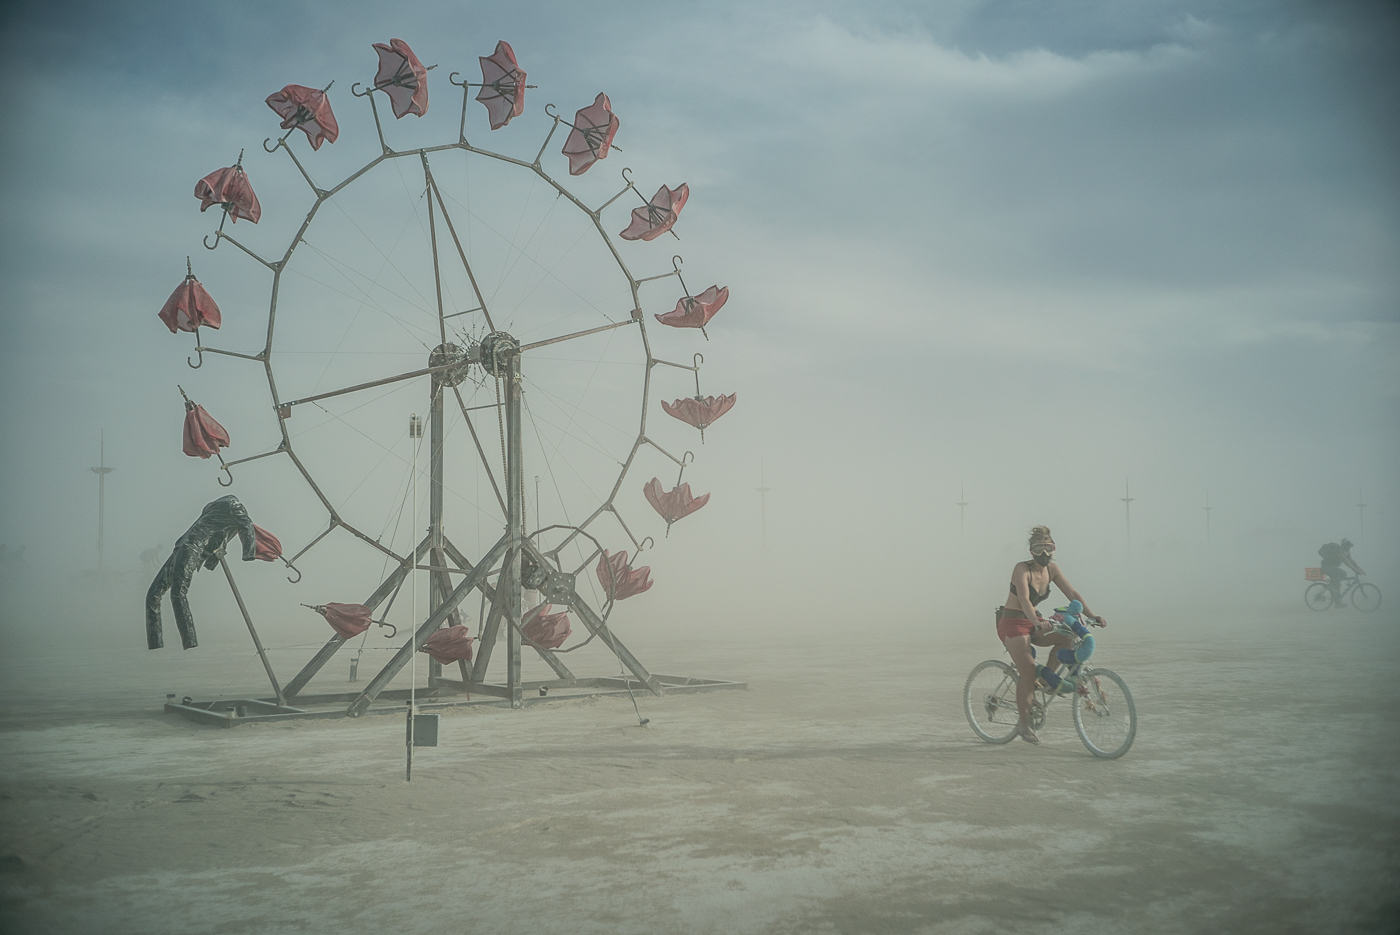 Umbrella Wheel, Burning Man 2014: In Dust We Trust - Photos of a Dusty Playa